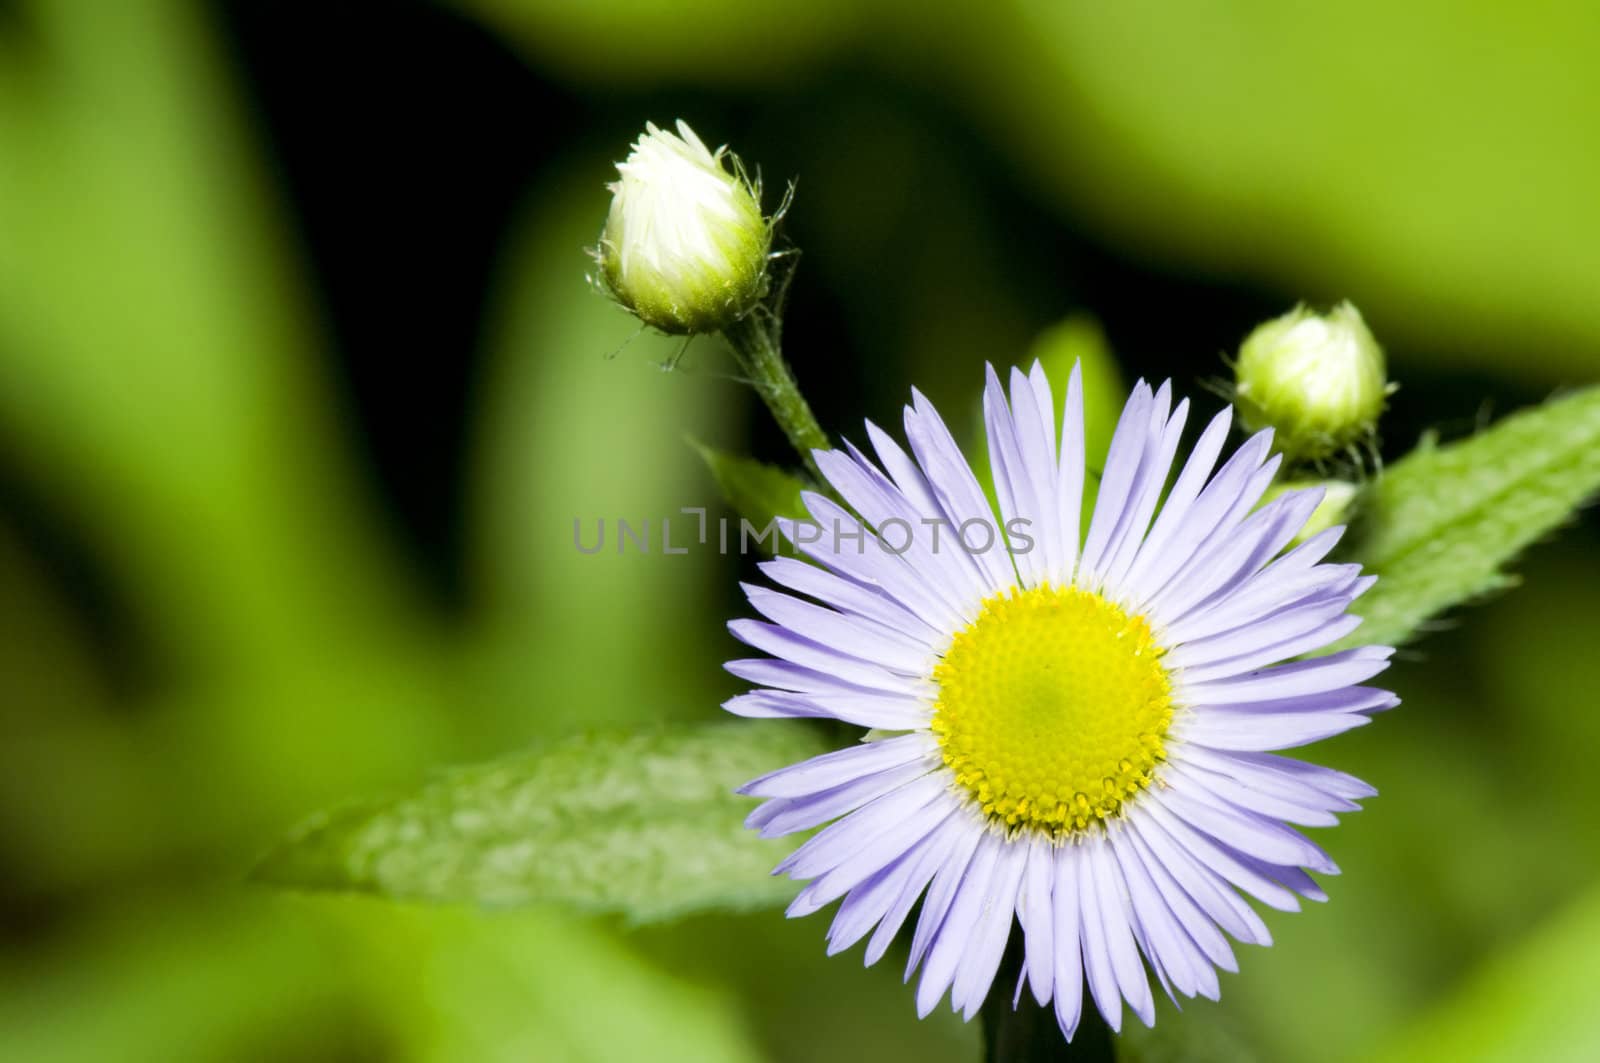 daisy flower macro shot, selective focus